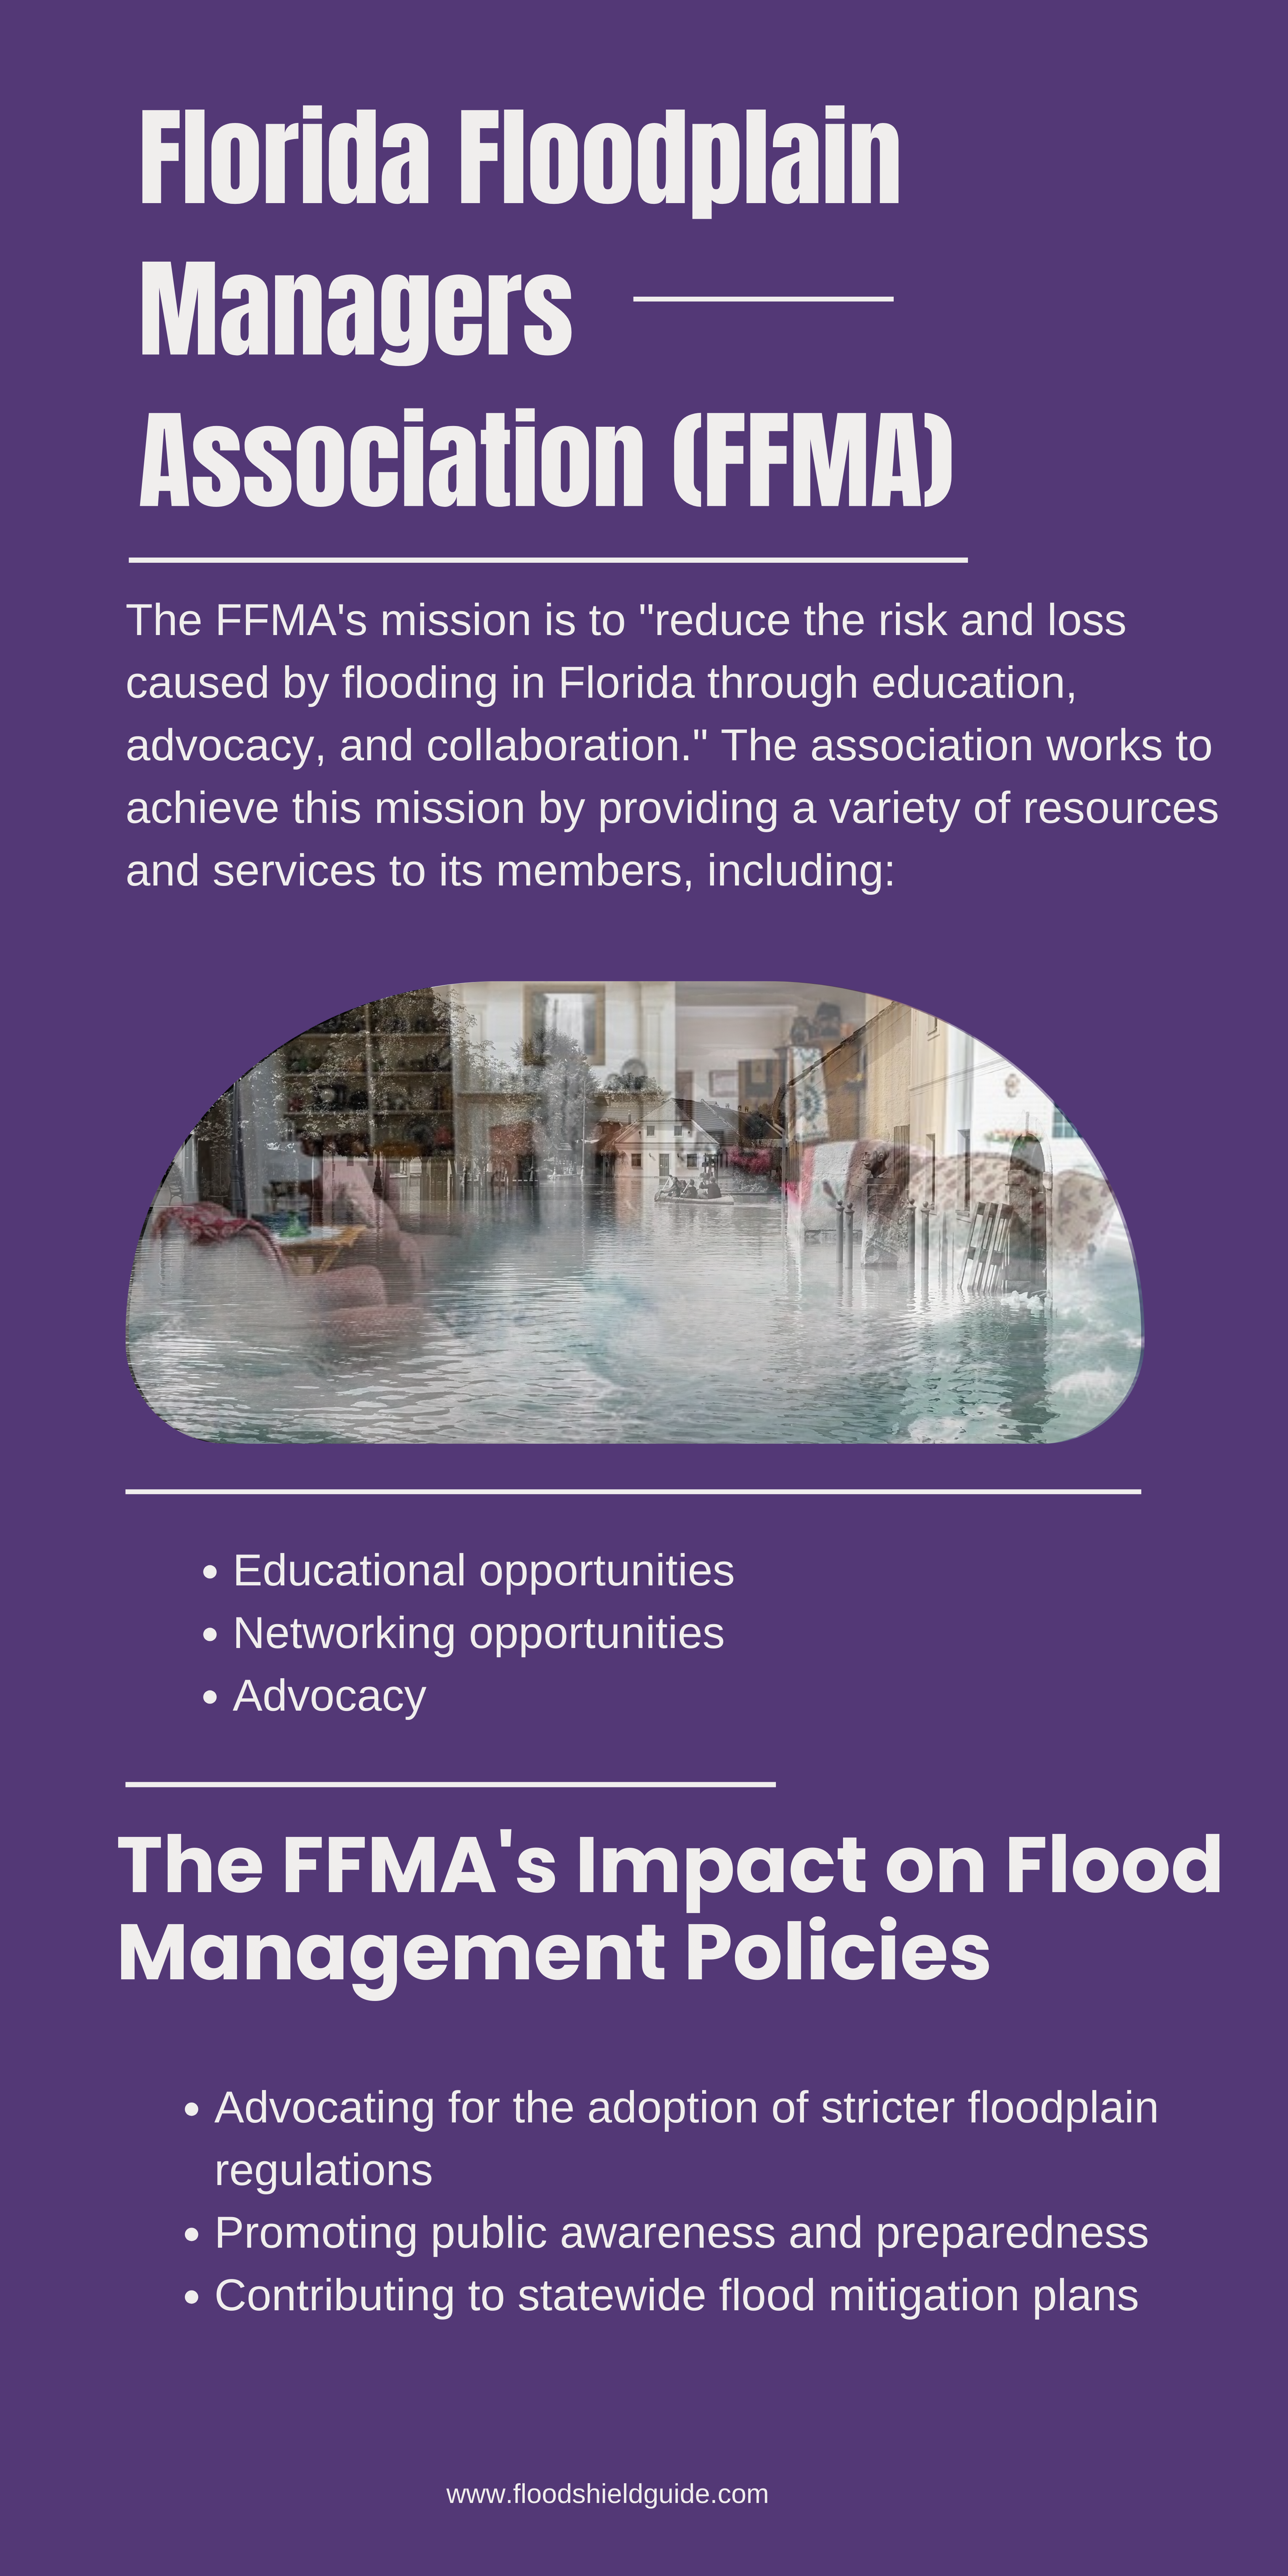 Florida Floodplain Managers Association (FFMA)